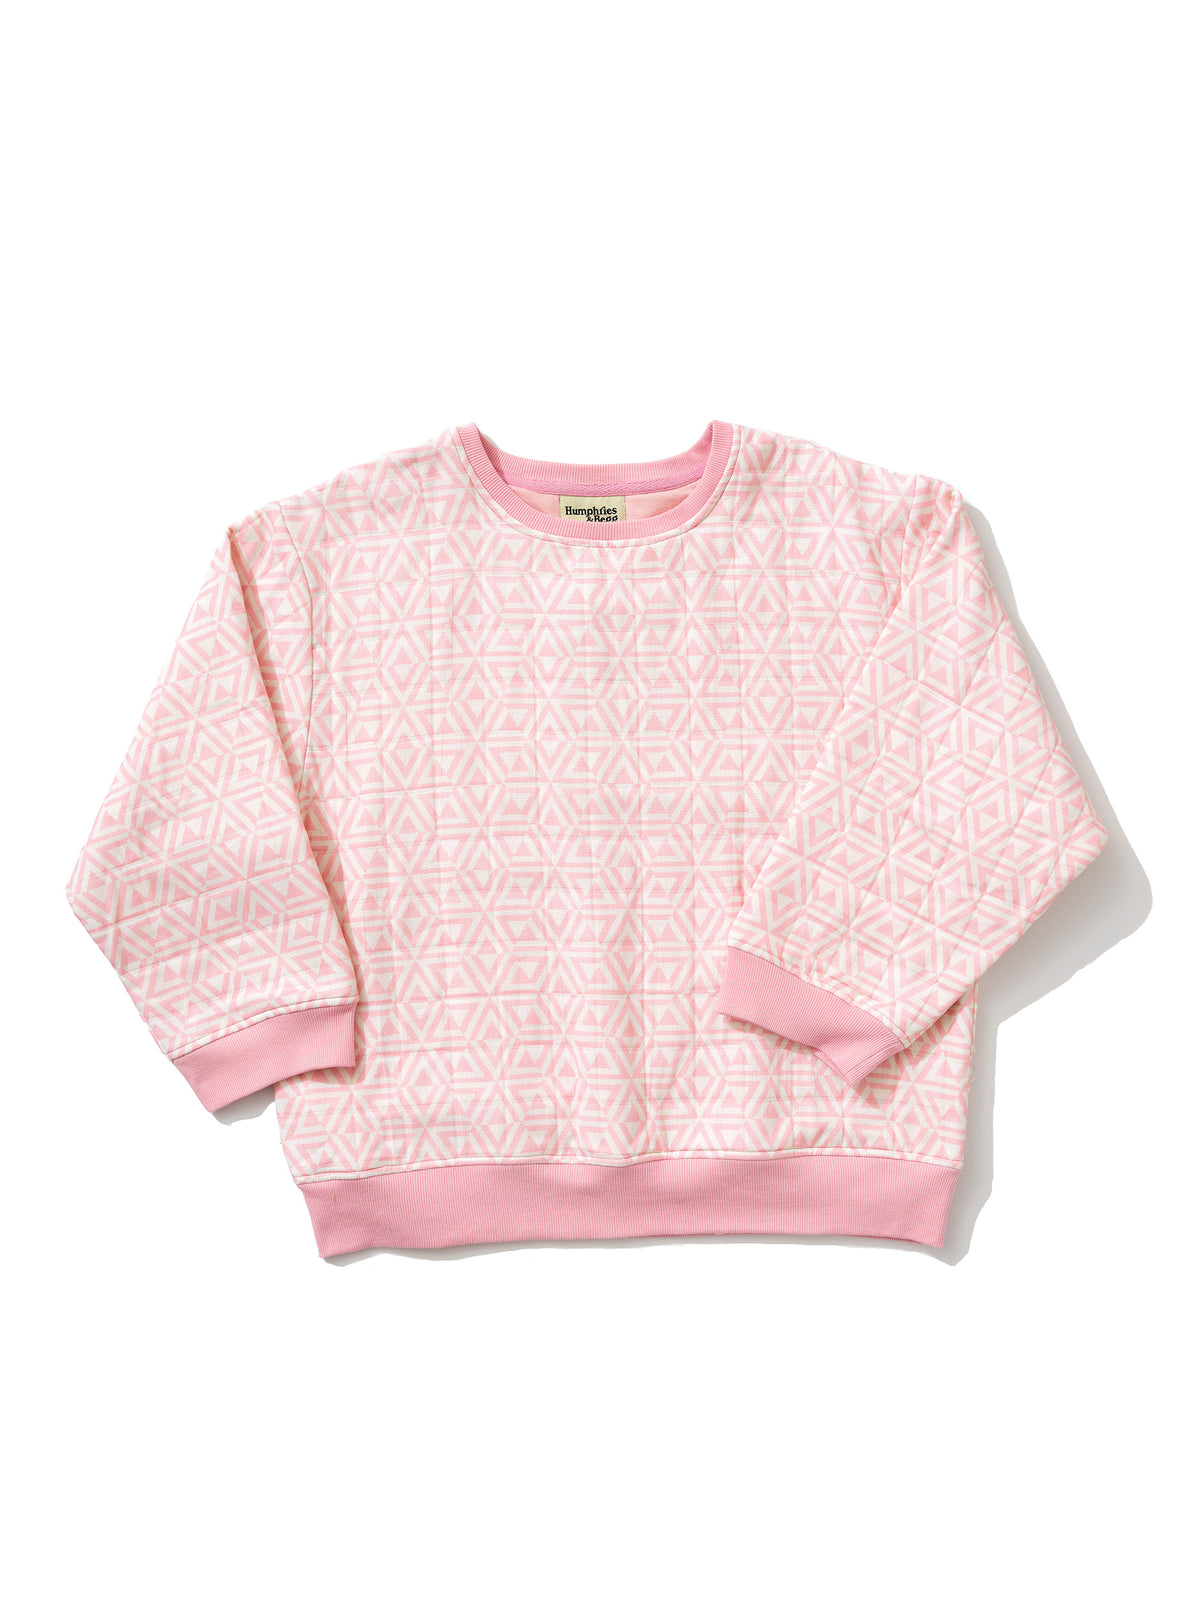 Quilted Jersey Sweatshirt in 'Pink Honeycomb'